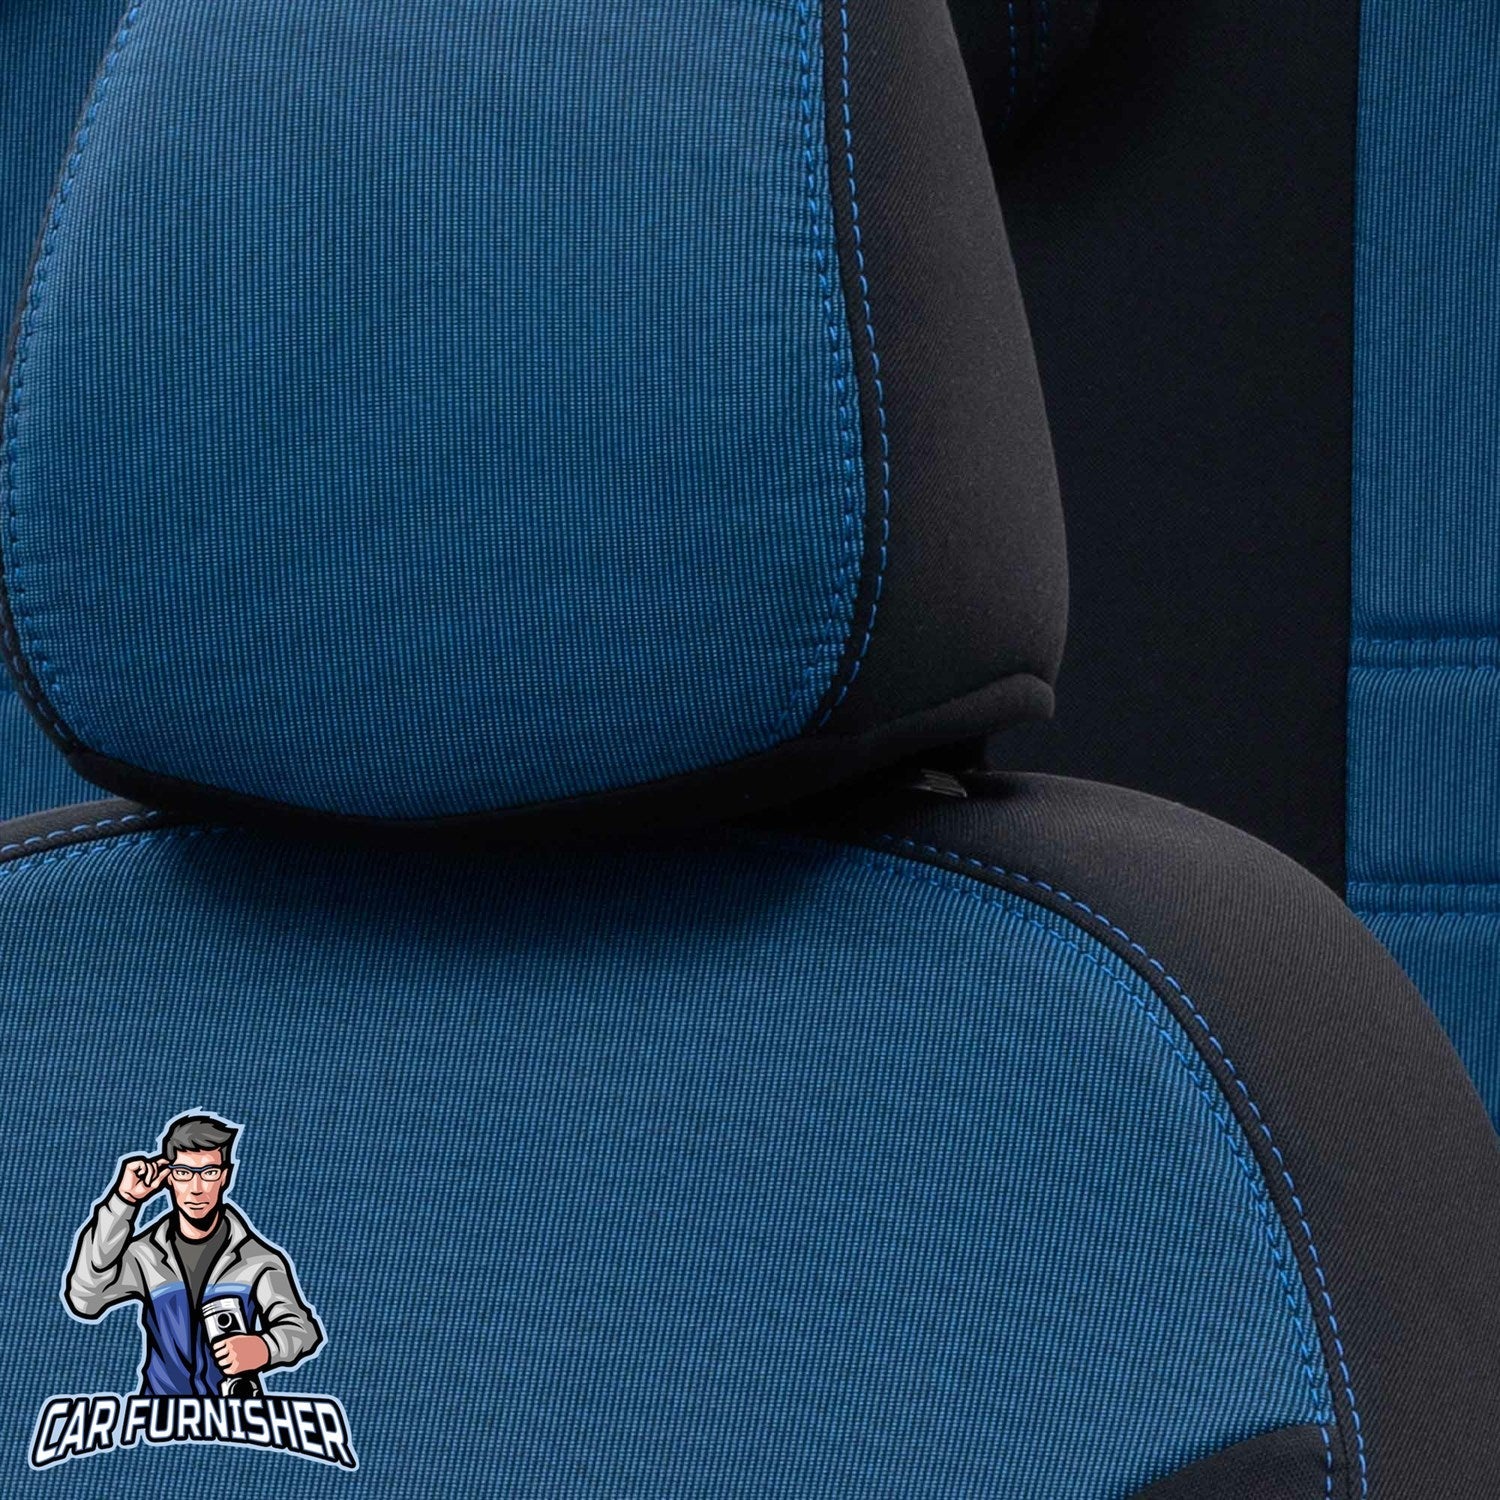 Mitsubishi Outlander Seat Covers Original Jacquard Design Blue Jacquard Fabric